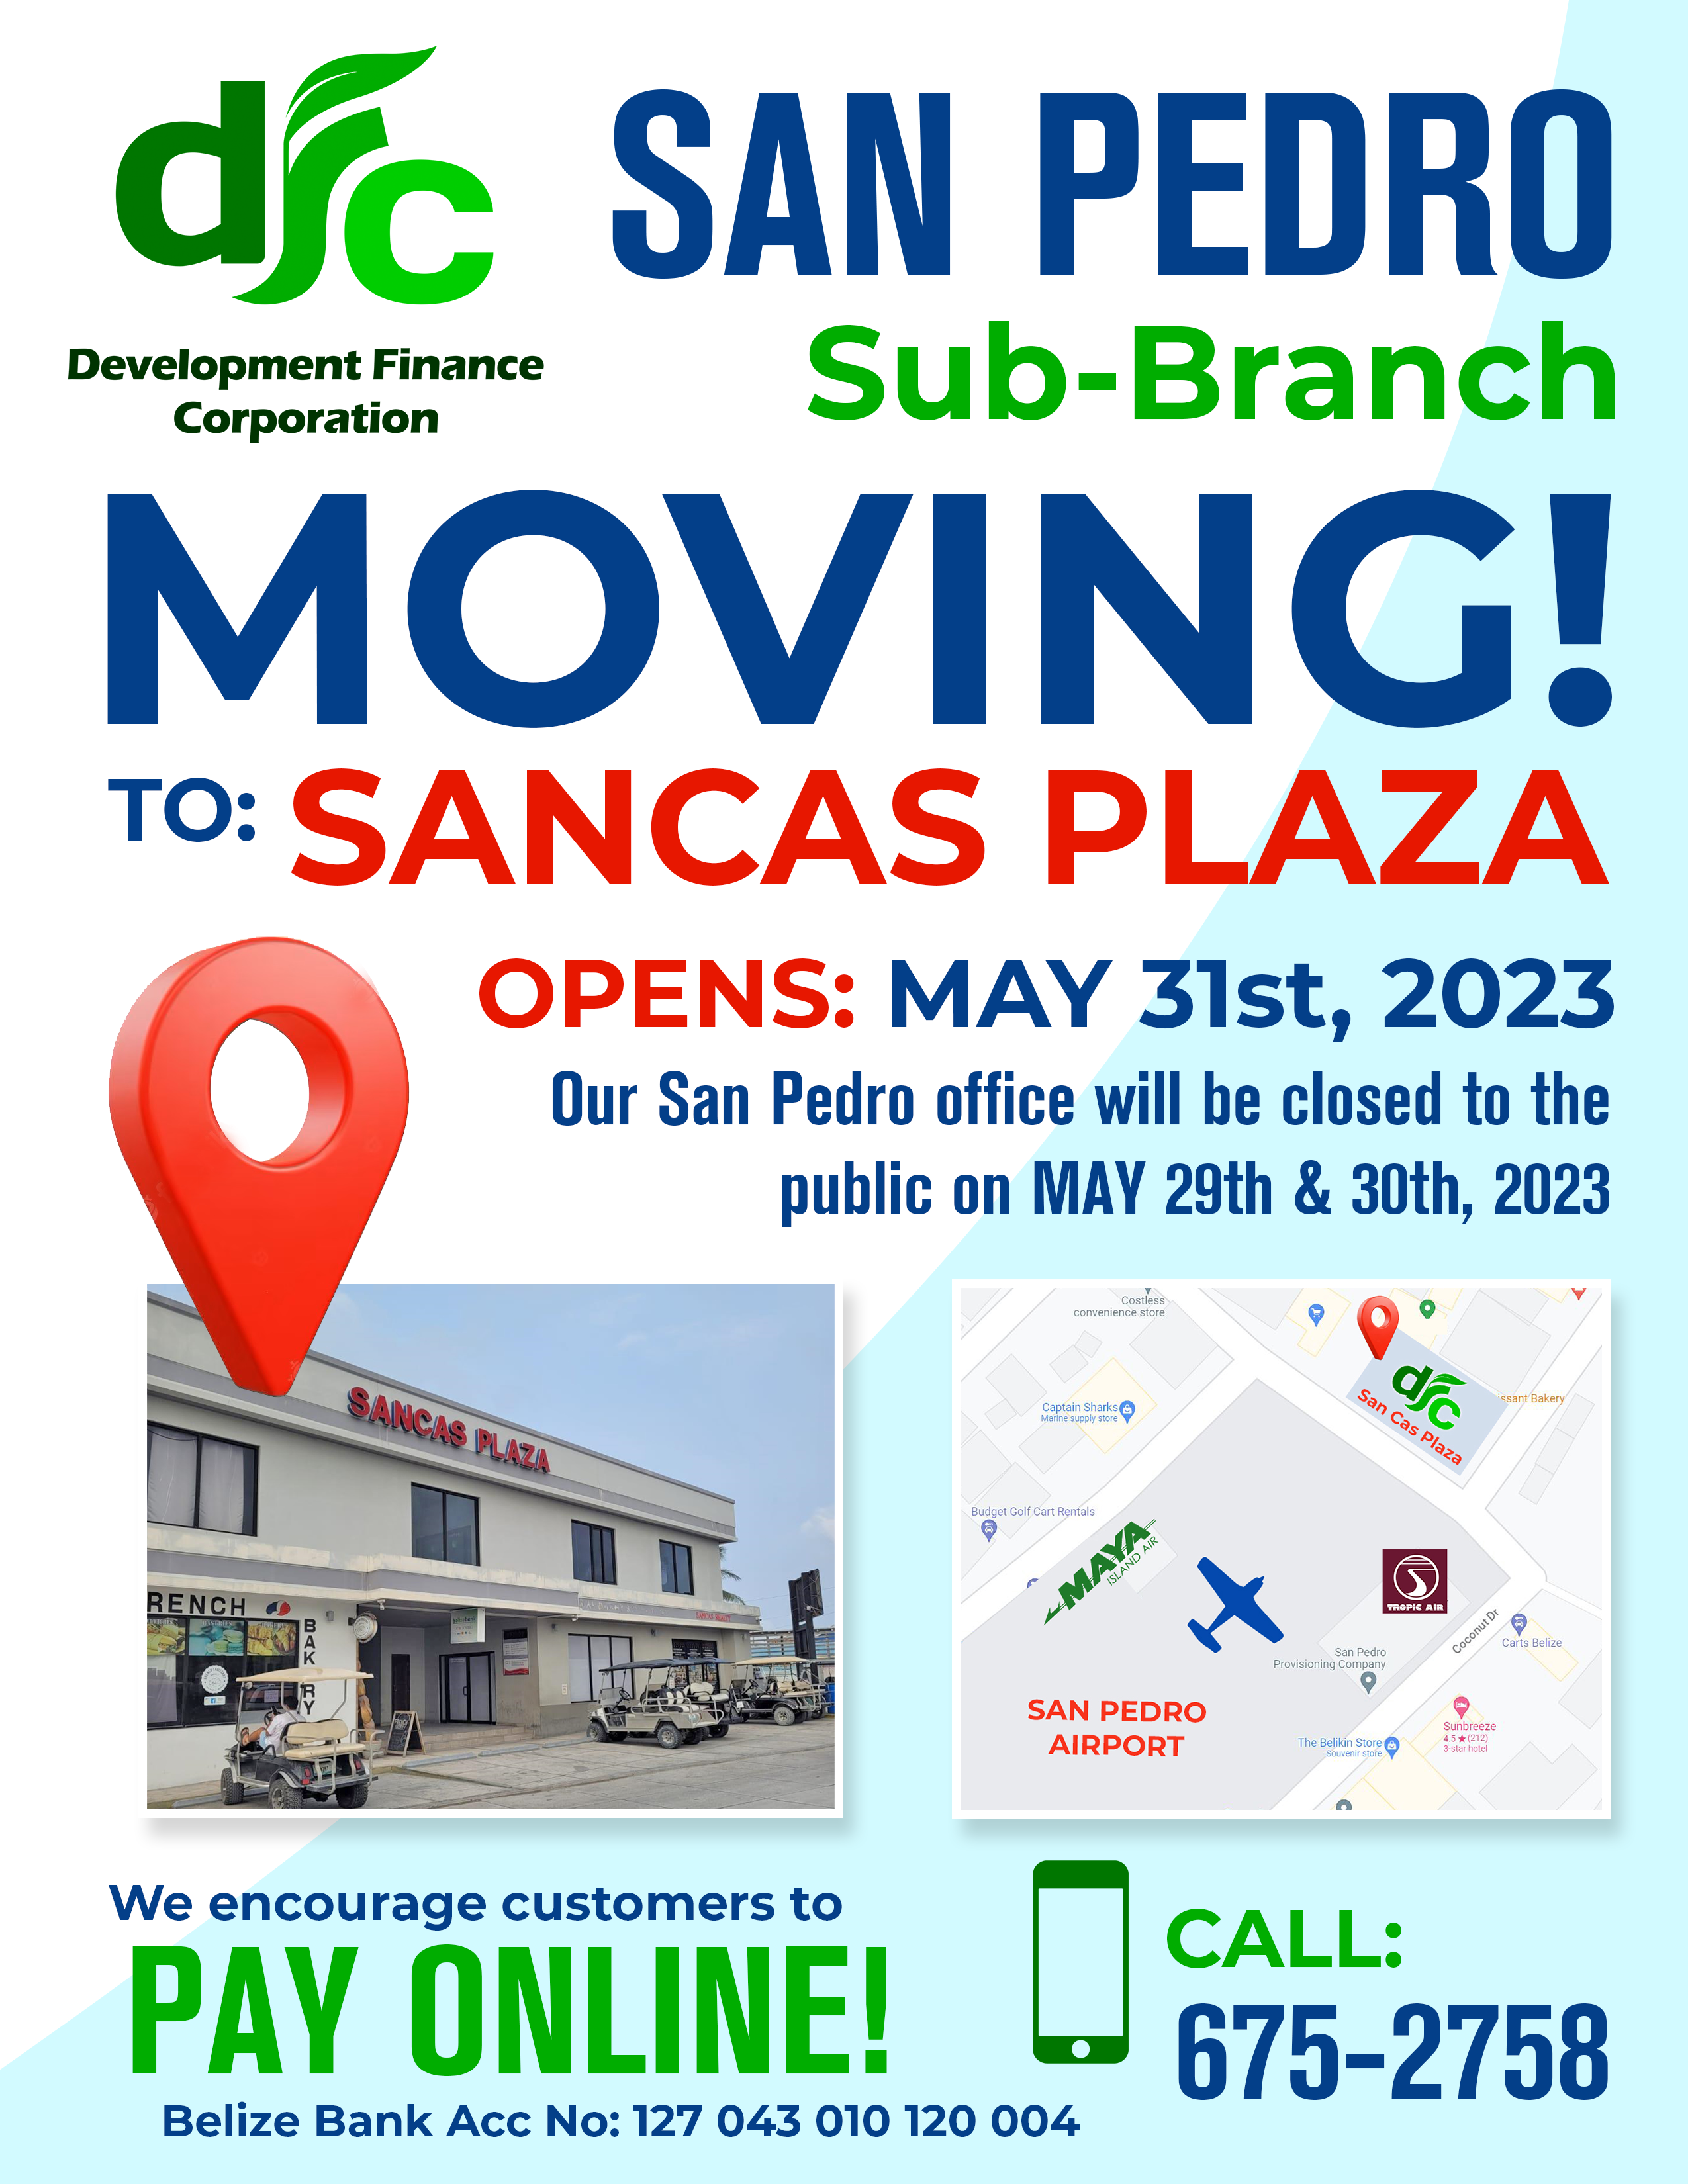 DFC San Pedro Relocation to SanCas Plaza